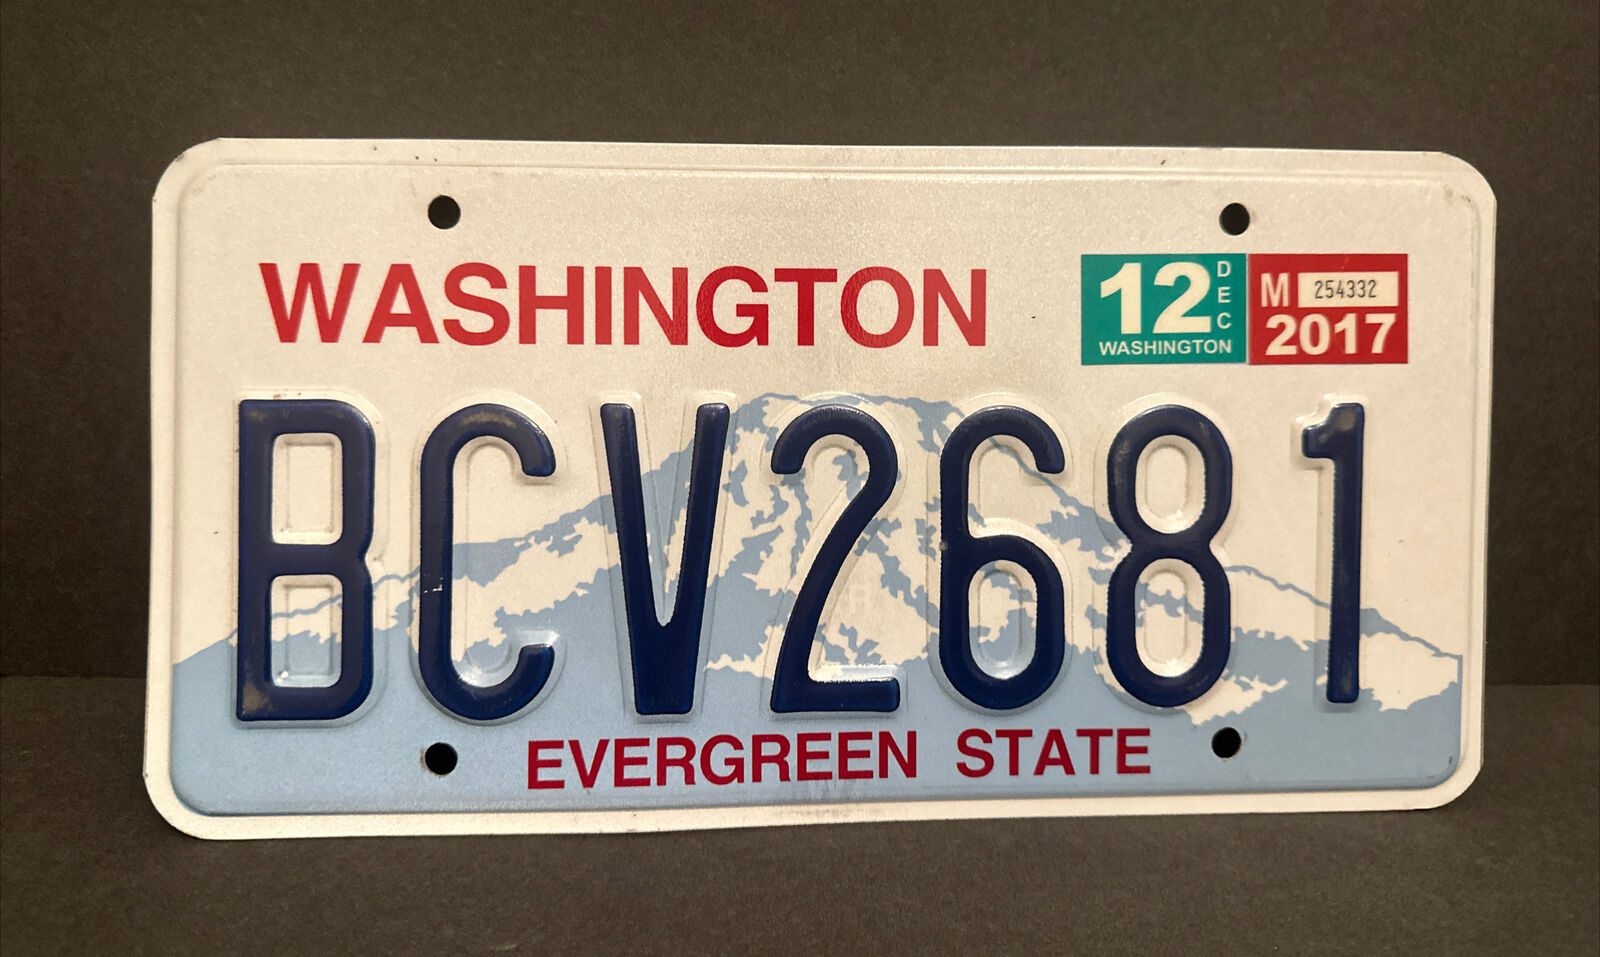 United States Washington Evergreen State License Plate BCV 2681 w/Stickers, MINT